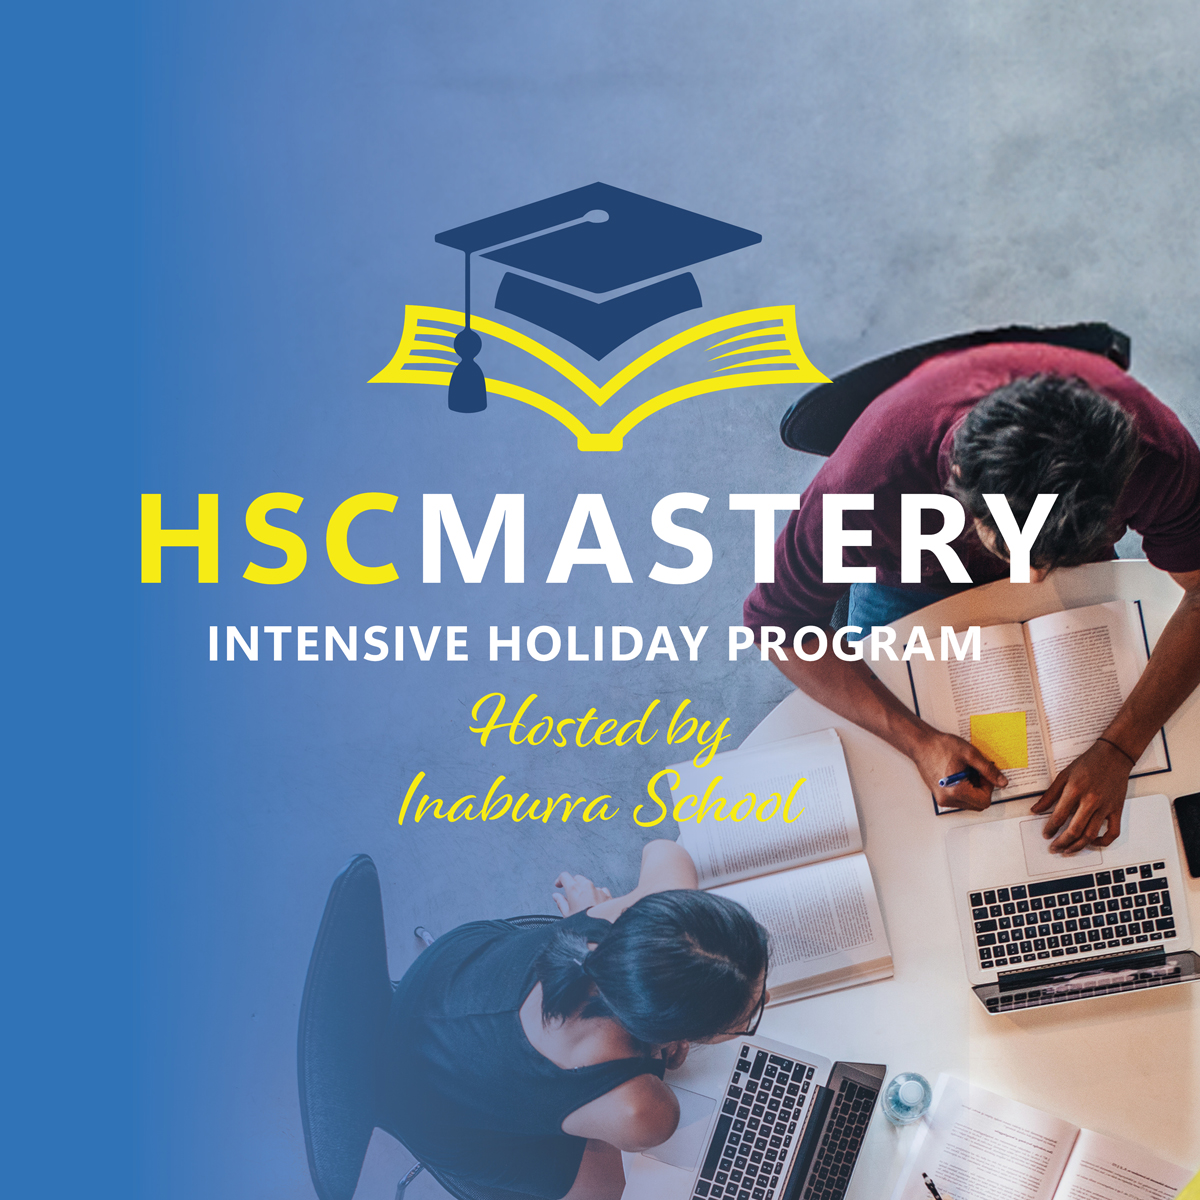 HSC-mastery-1080x1080.jpg